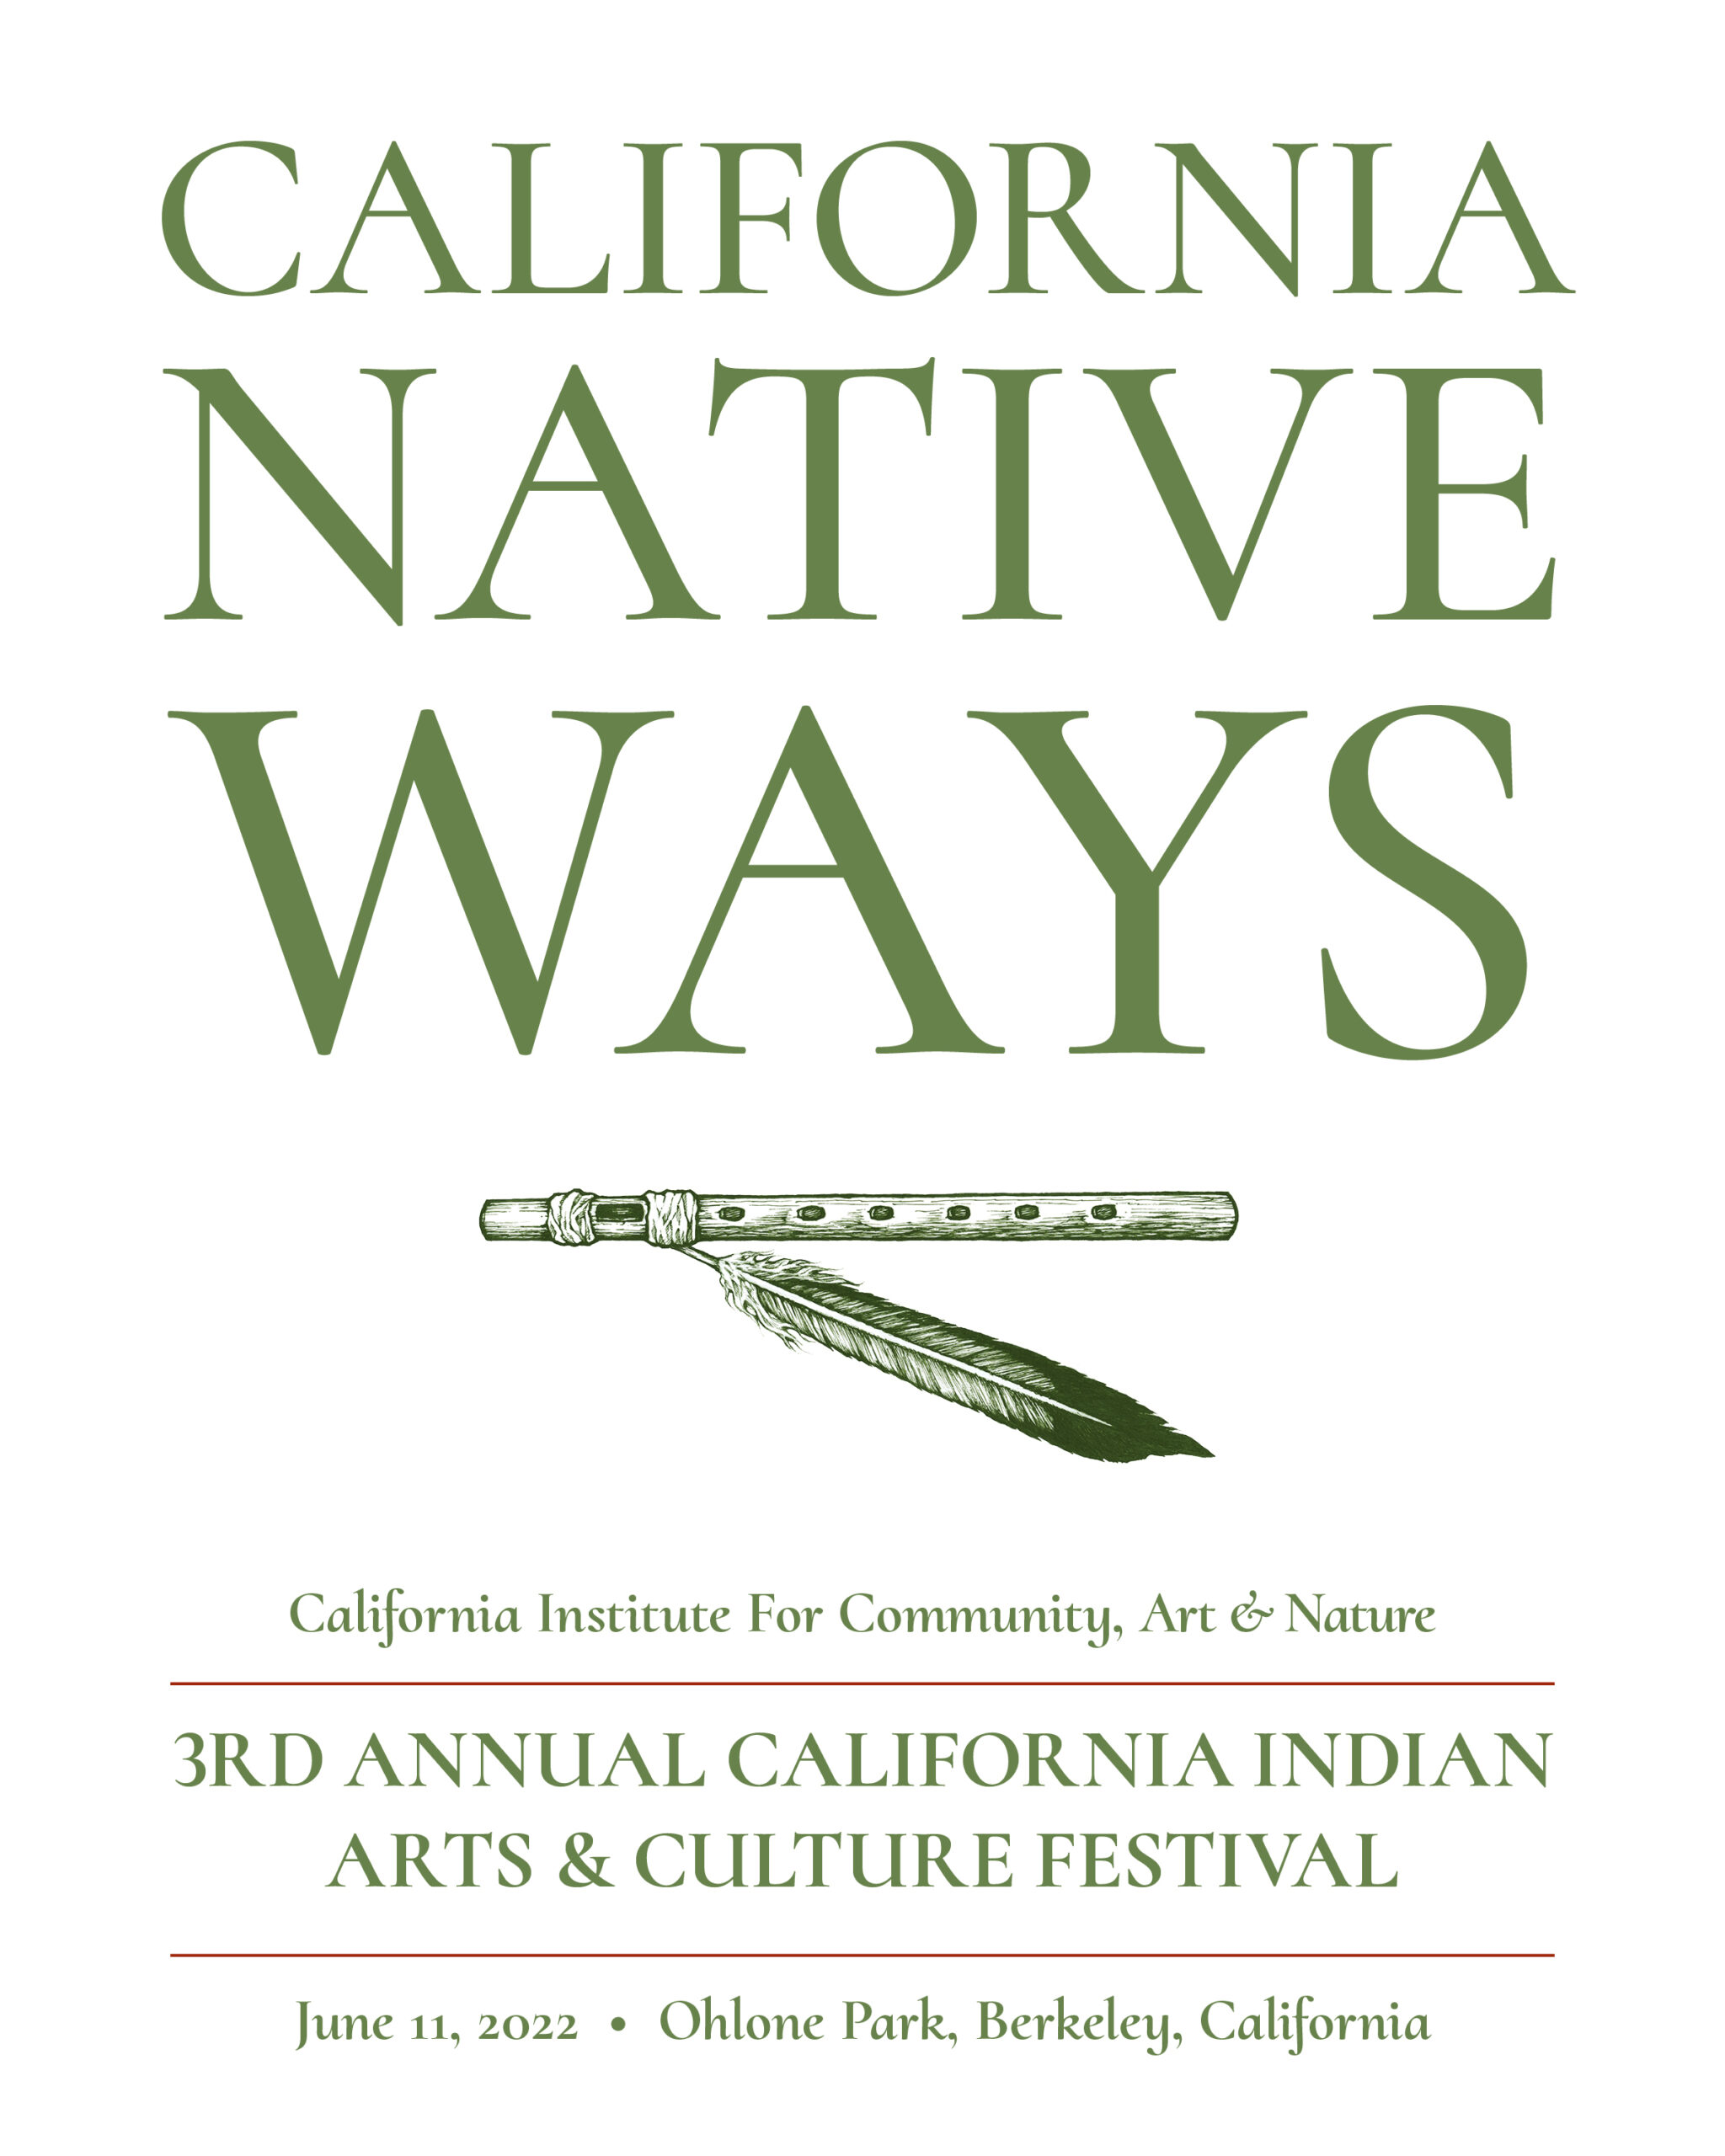 California Native Ways - 3rd Annual California Indian Arts & Culture Festival - June 11th, Ohlone Park, Berkeley, California